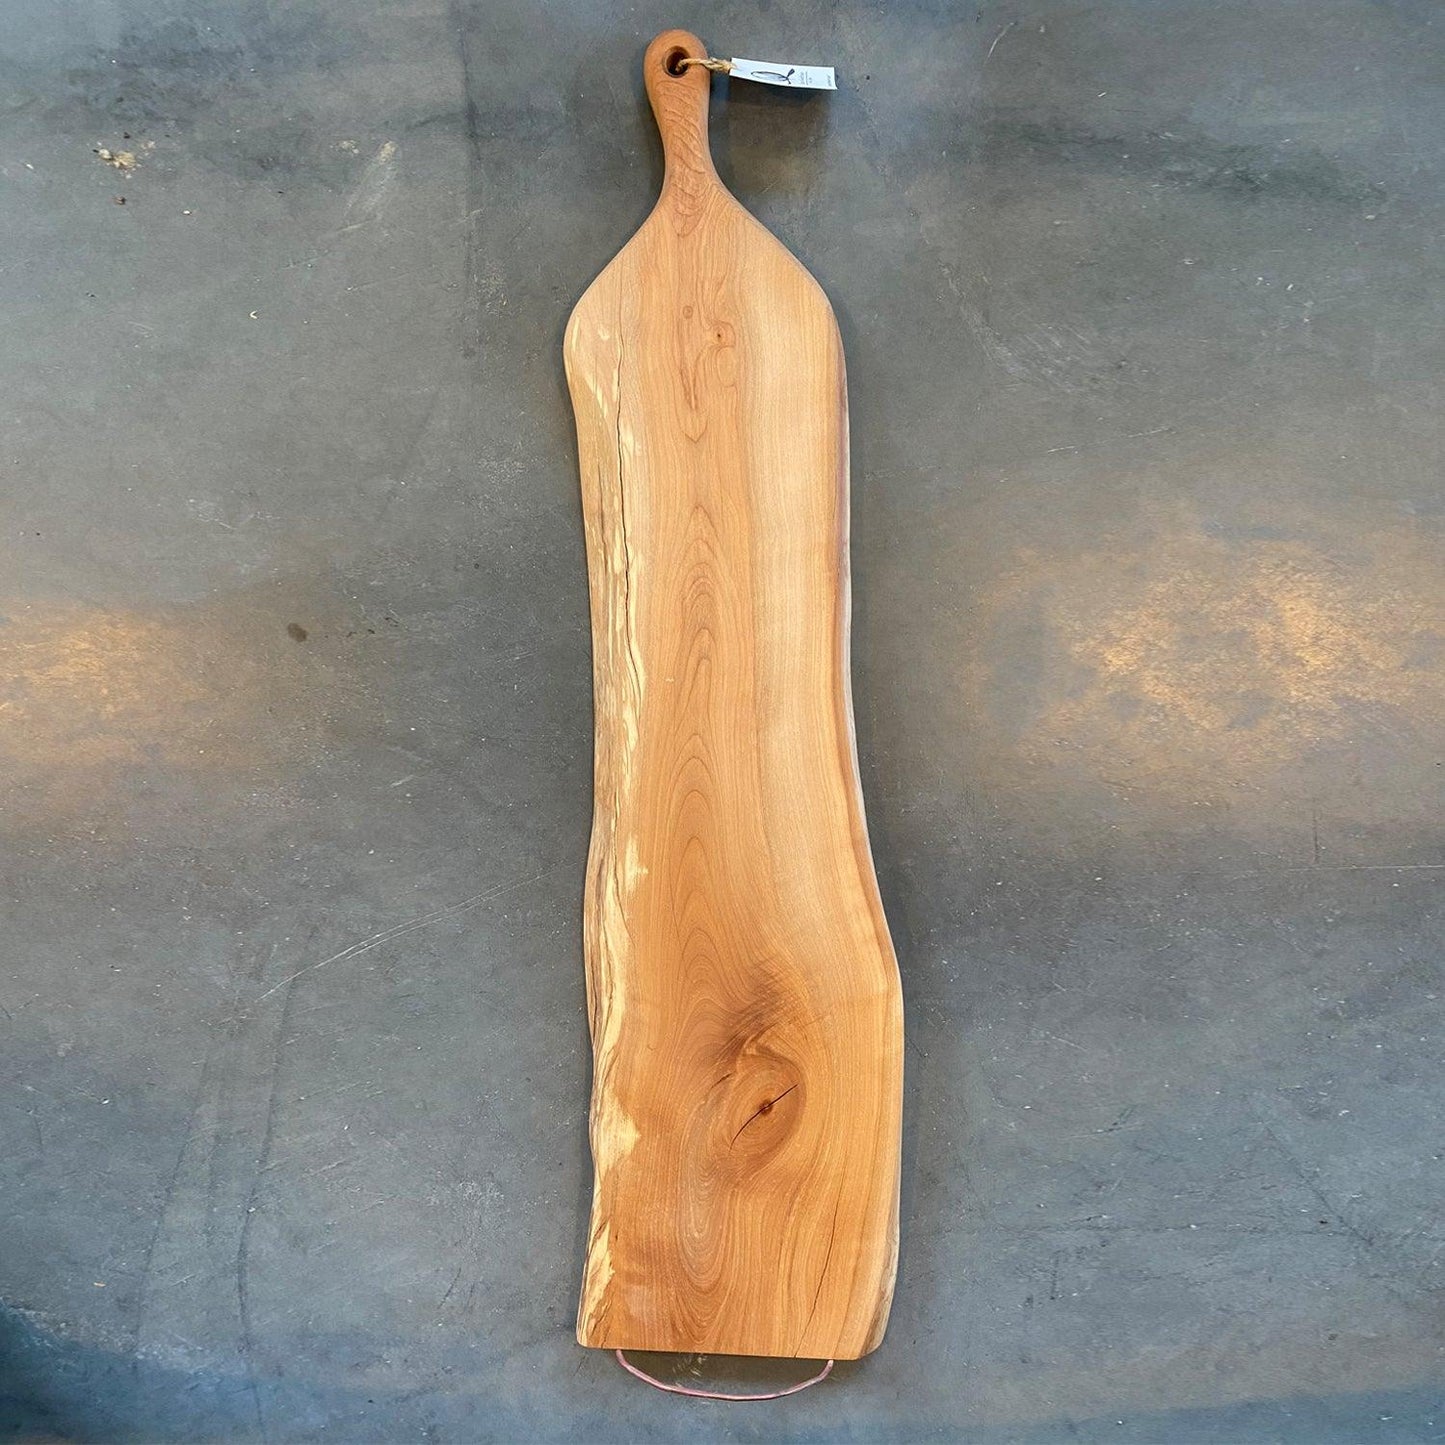 Wooden Serving Boards